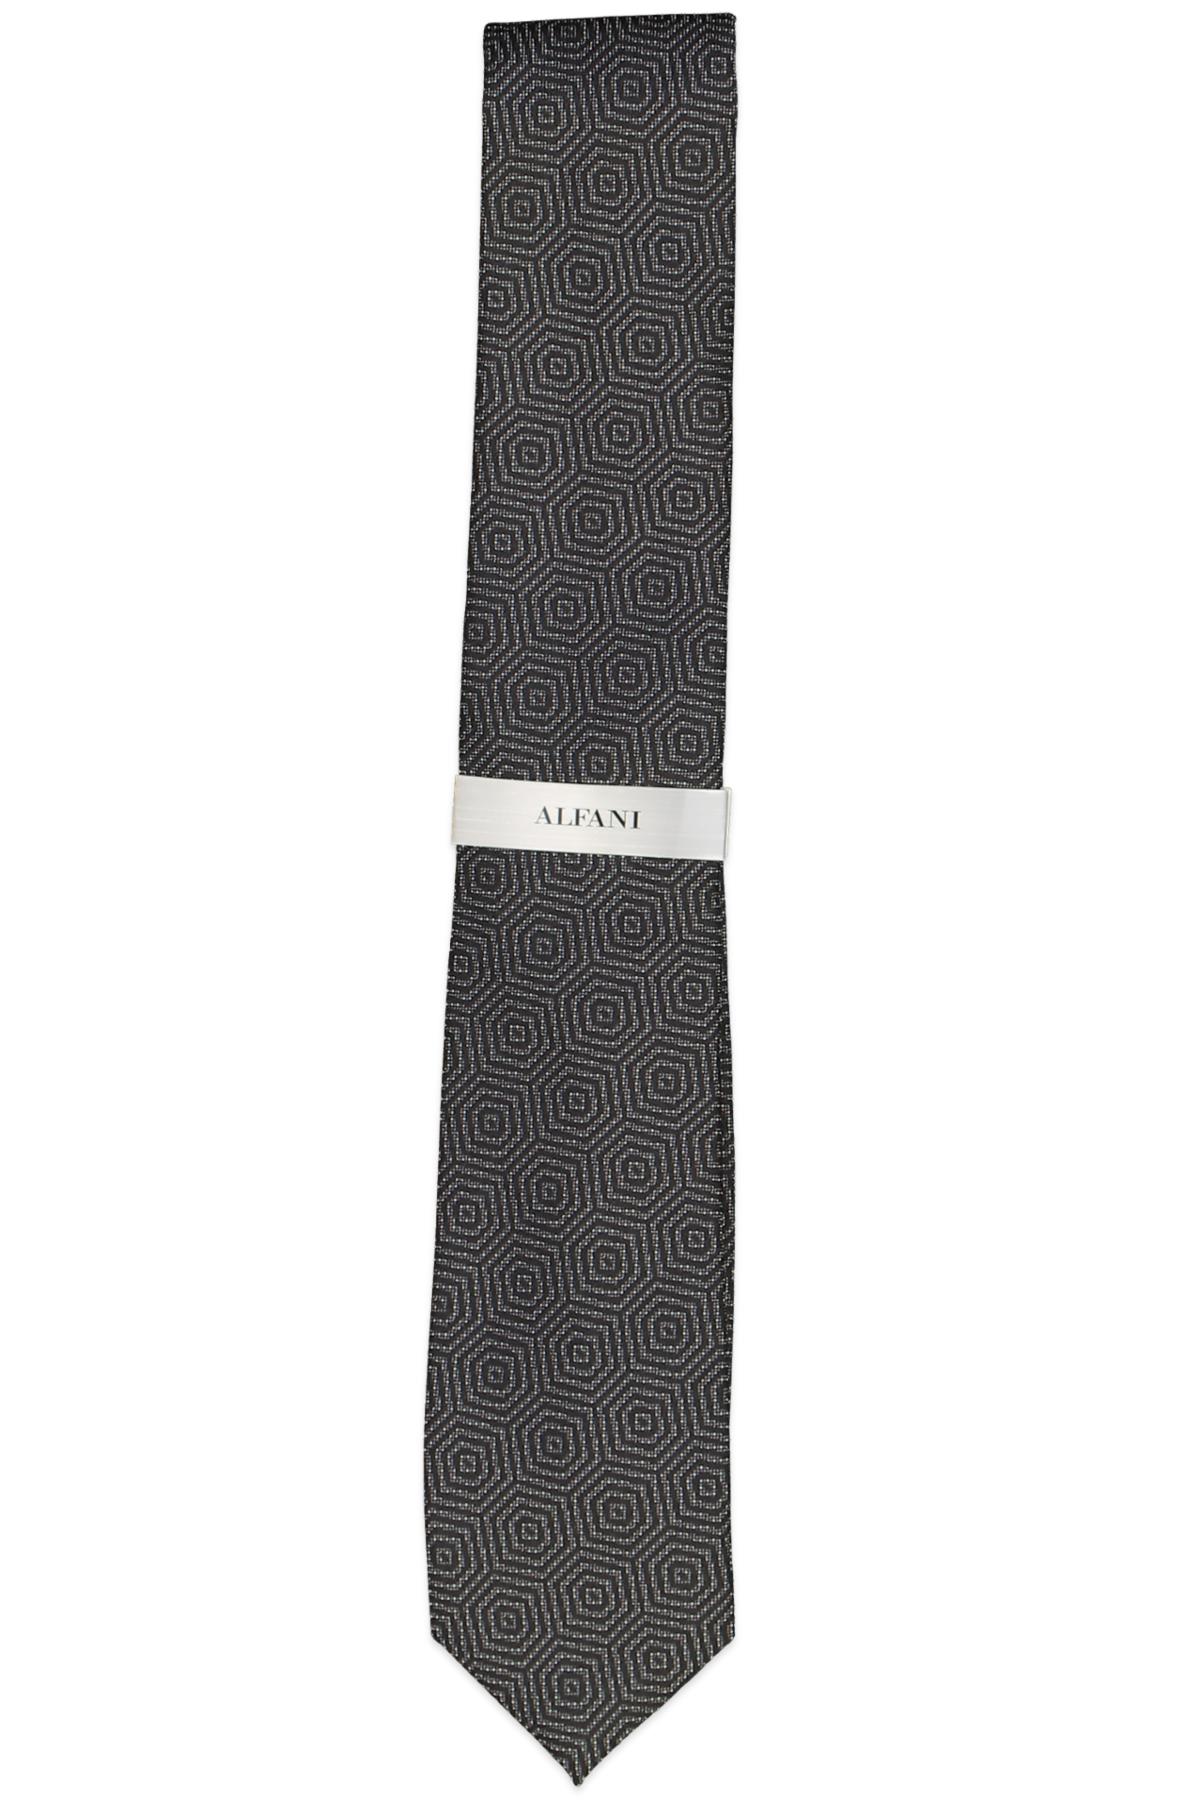 Alfani Debin Abstract Plaid Tie Black